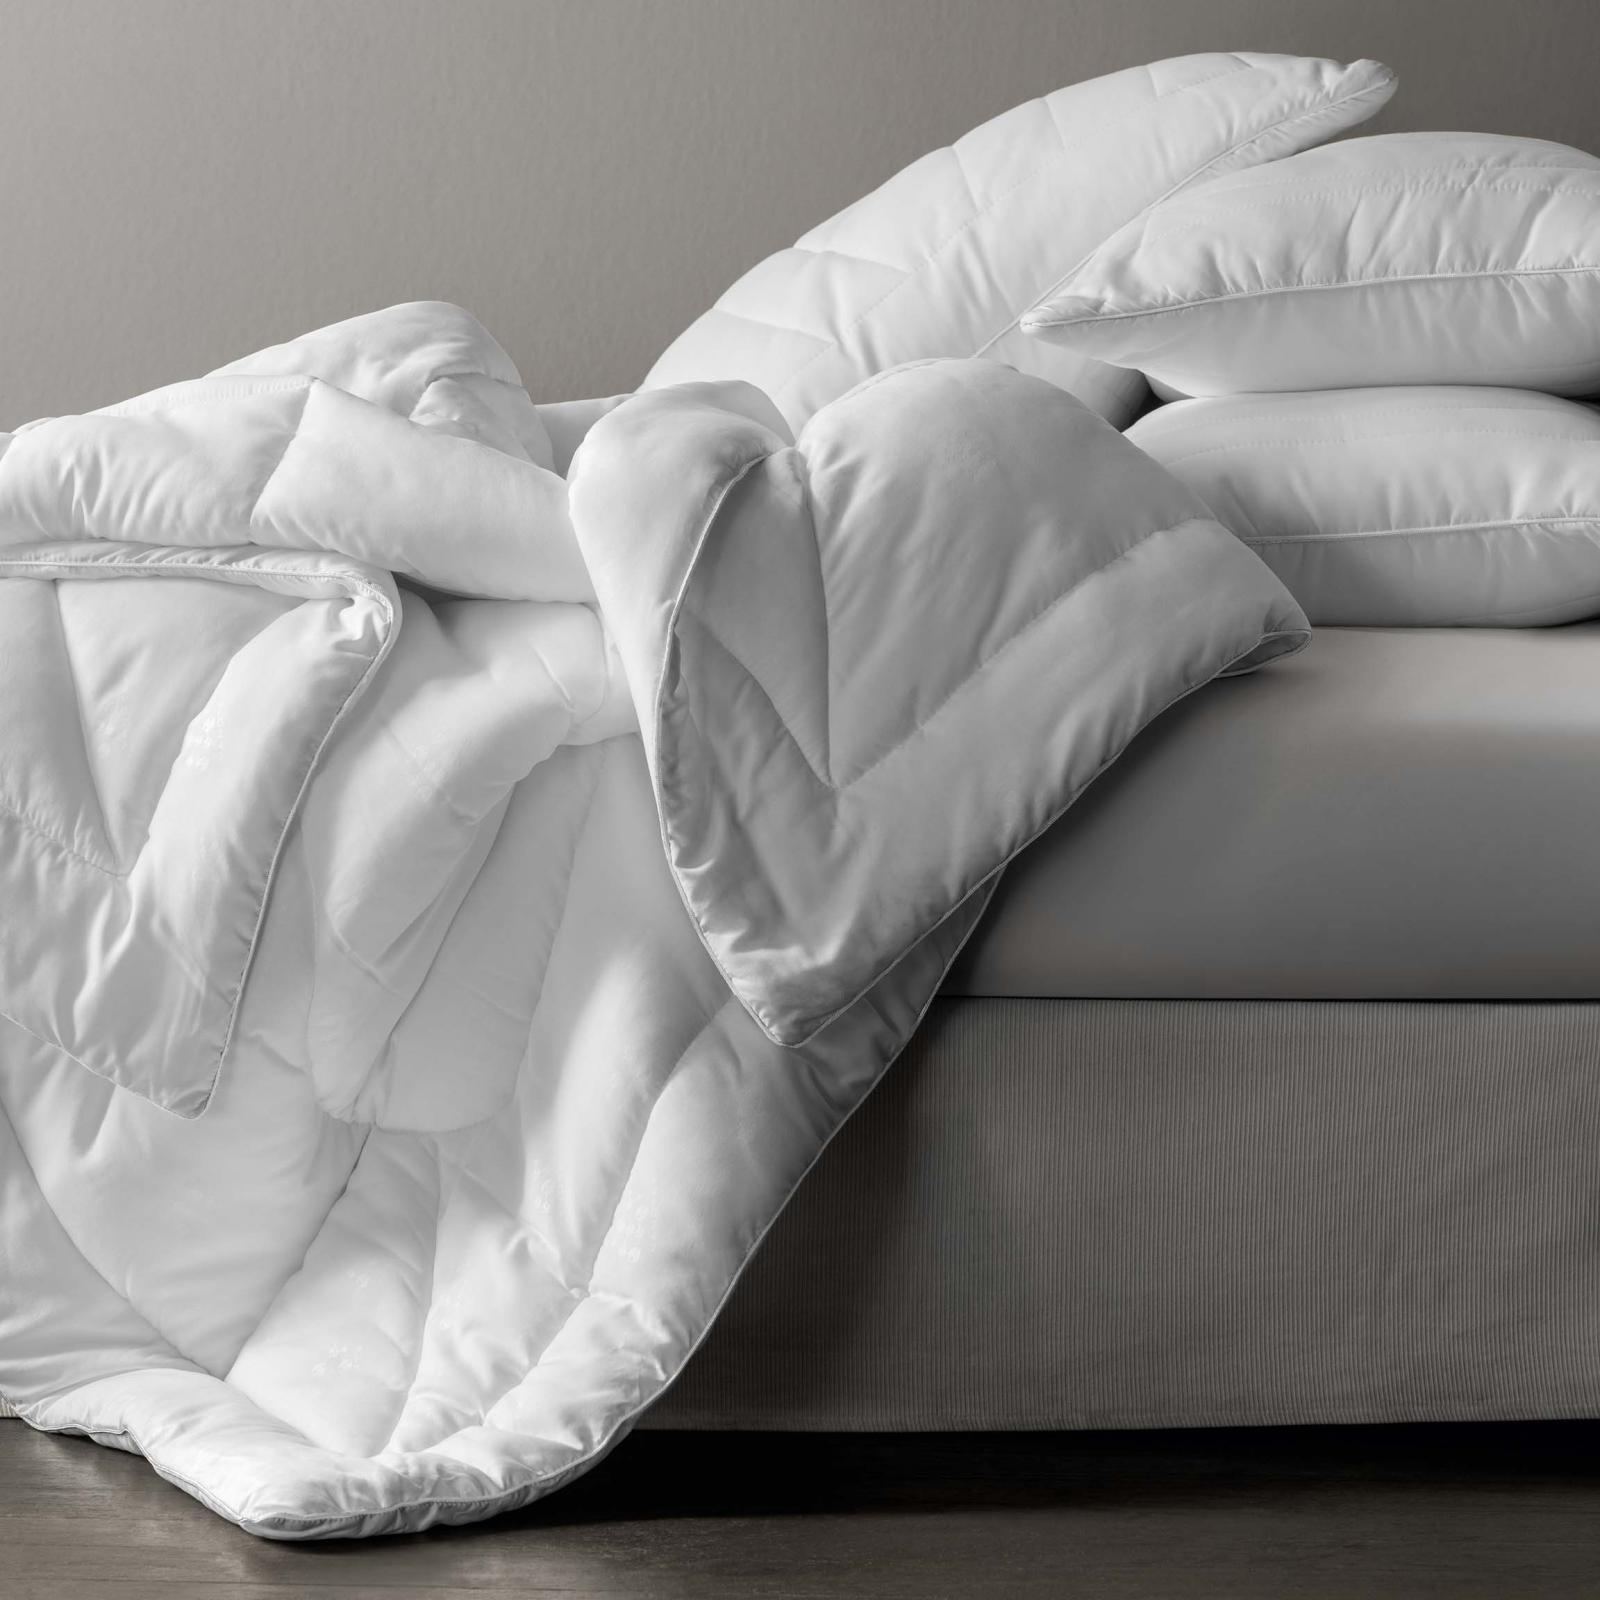 Одеяло Гелиос 140х200 см (20.04.12.0120), цвет белый, размер 140х200 см - фото 8